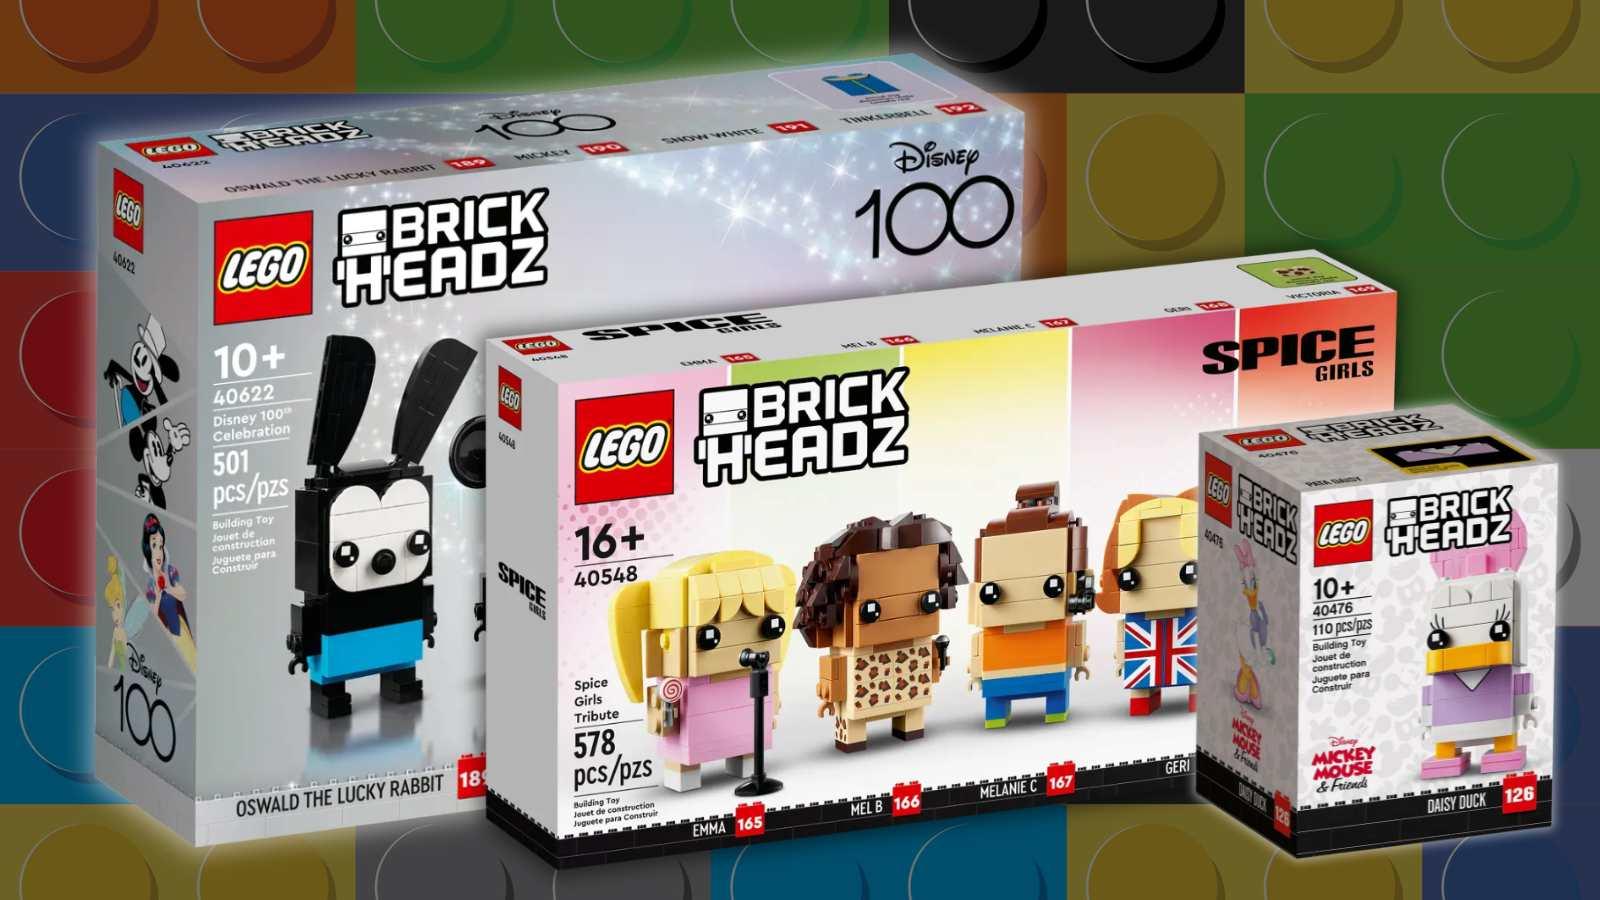 Three of the LEGO BrickHeadz sets discounted at LEGO